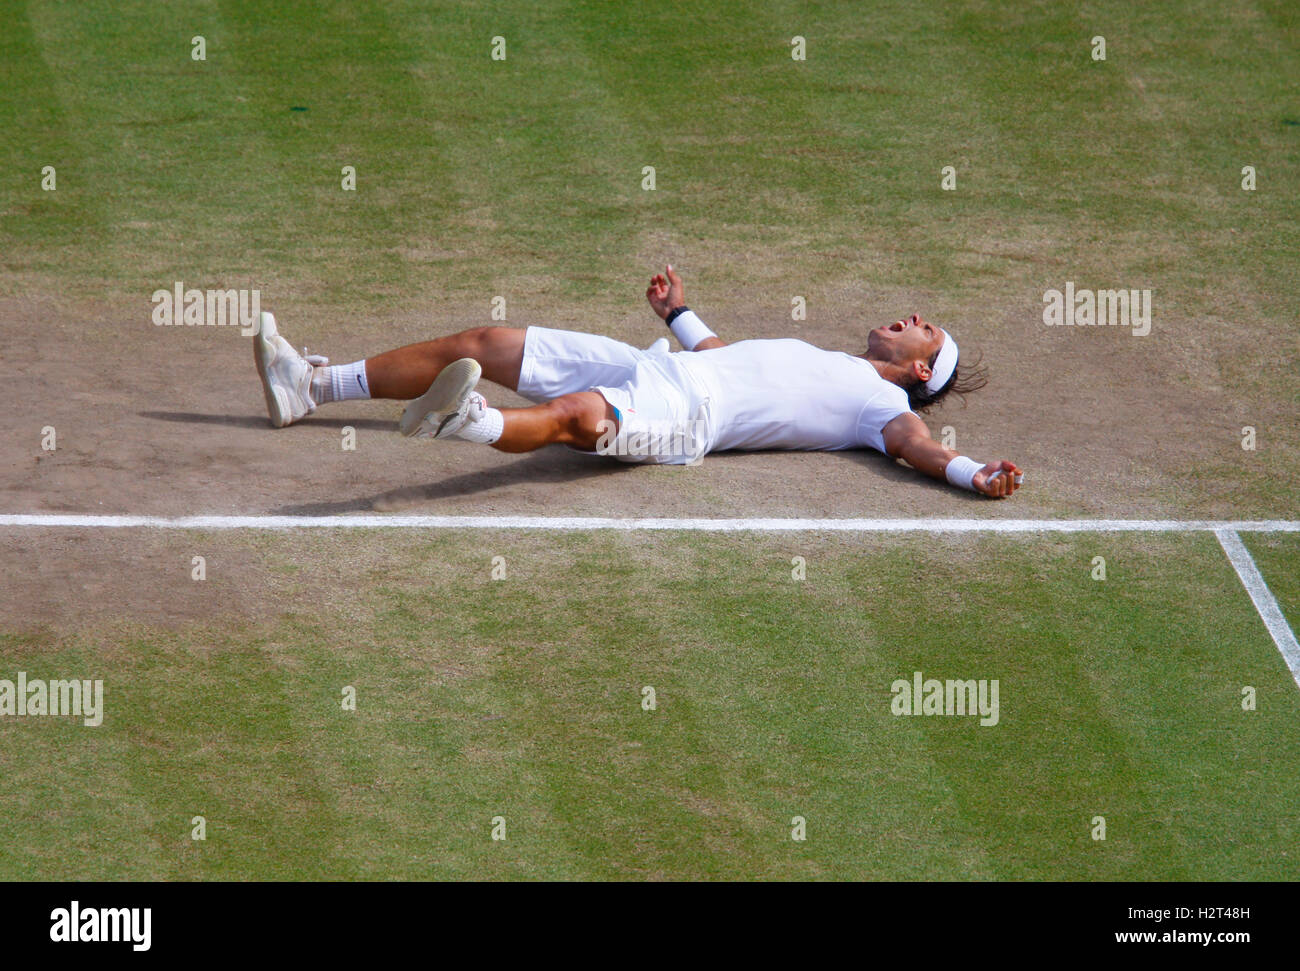 Men's singles final, Rafael Nadal, Spain, 2010 Wimbledon, ITF Grand Slam tournament, Wimbledon, England, United Kingdom, Europe Stock Photo